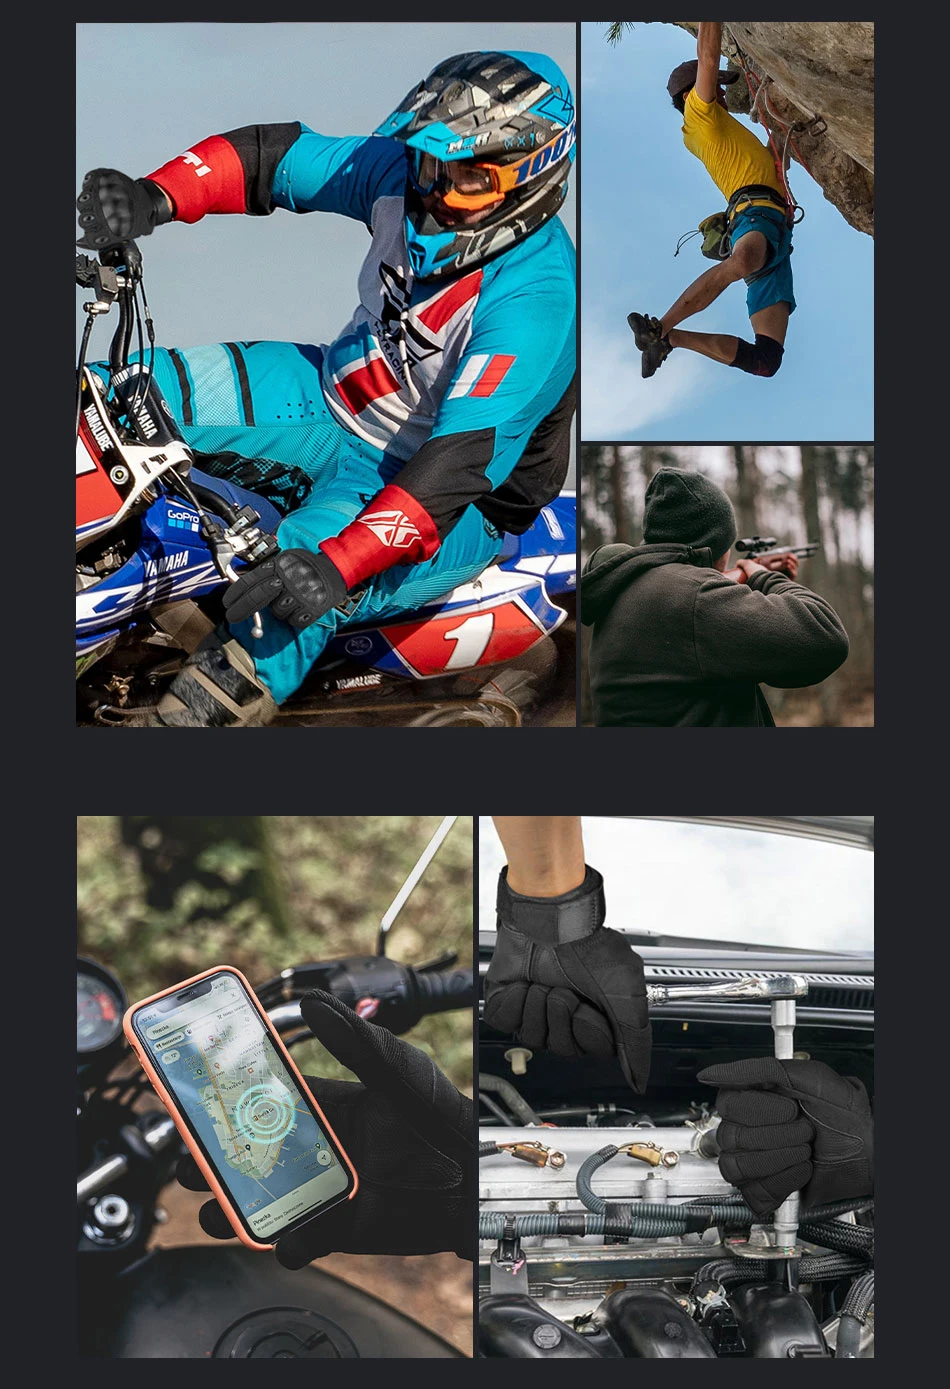 OZERO รถจักรยานยนต์ยุทธวิธีถุงมือกีฬาถุงมือทหาร Touchscreen ป้องกันขี่การล่าสัตว์ Gloves오토바이여름장갑